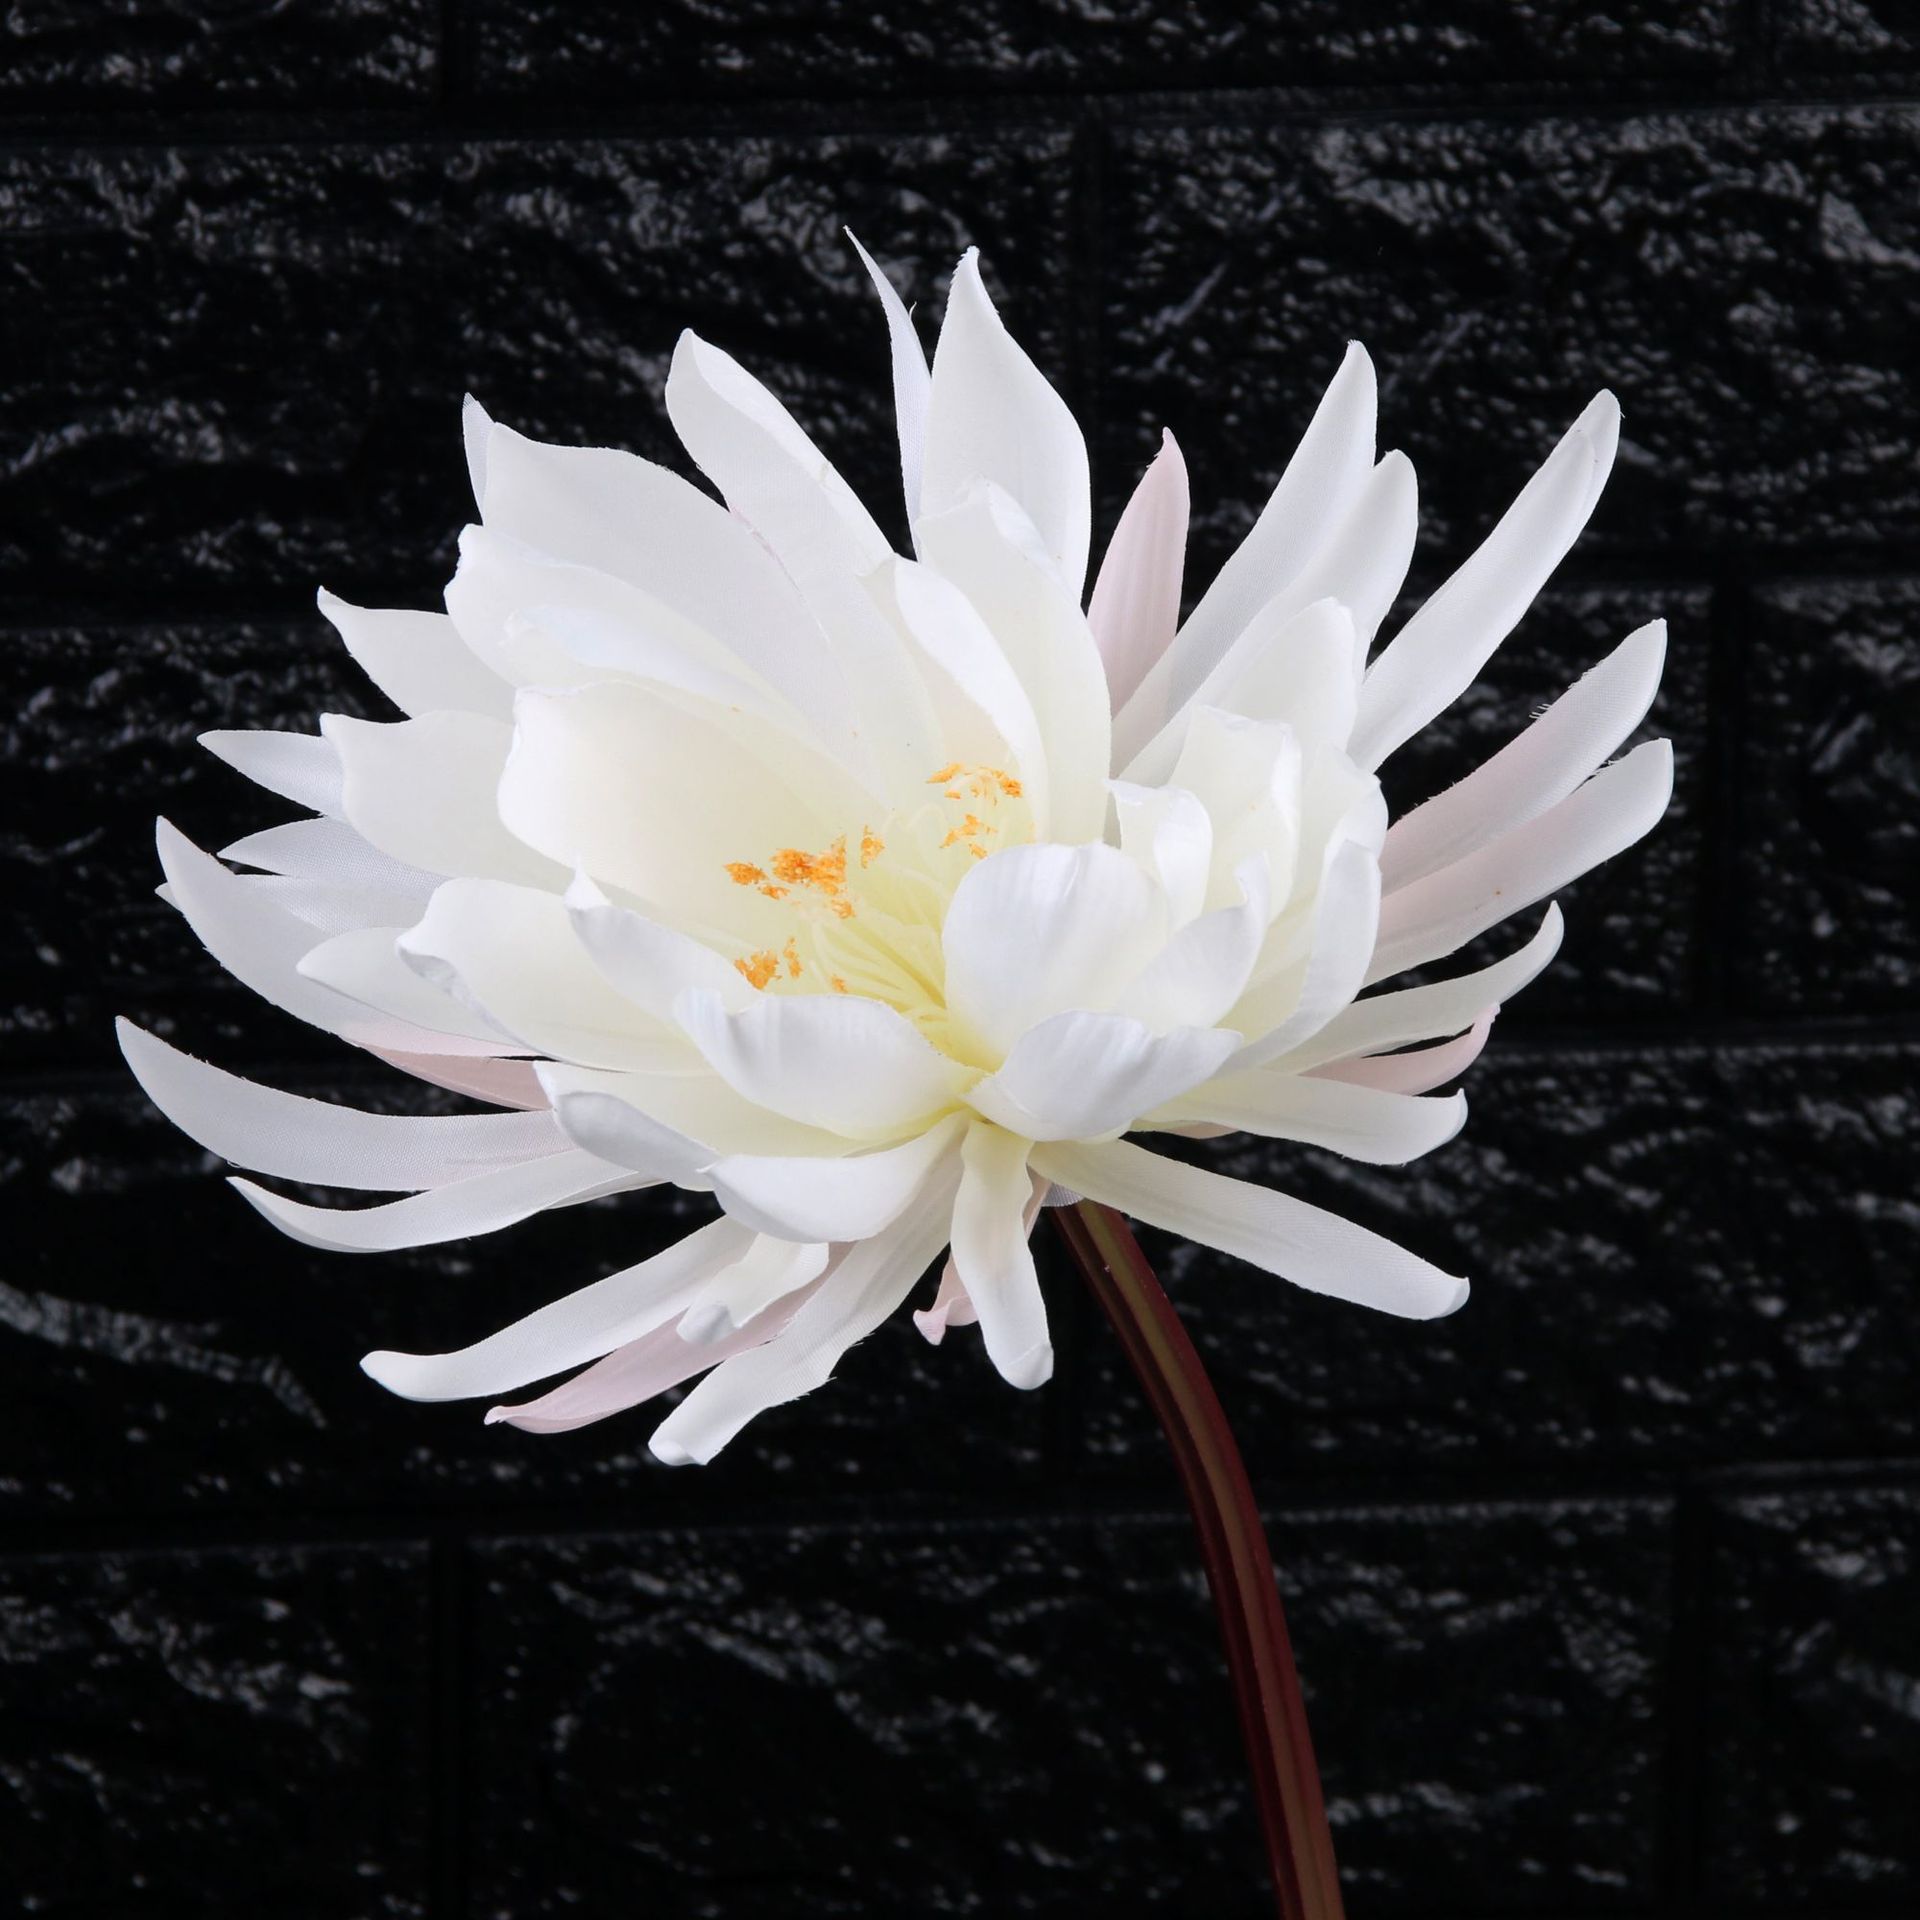 Ảnh hoa Sen white nền tối cực kỳ đẹp